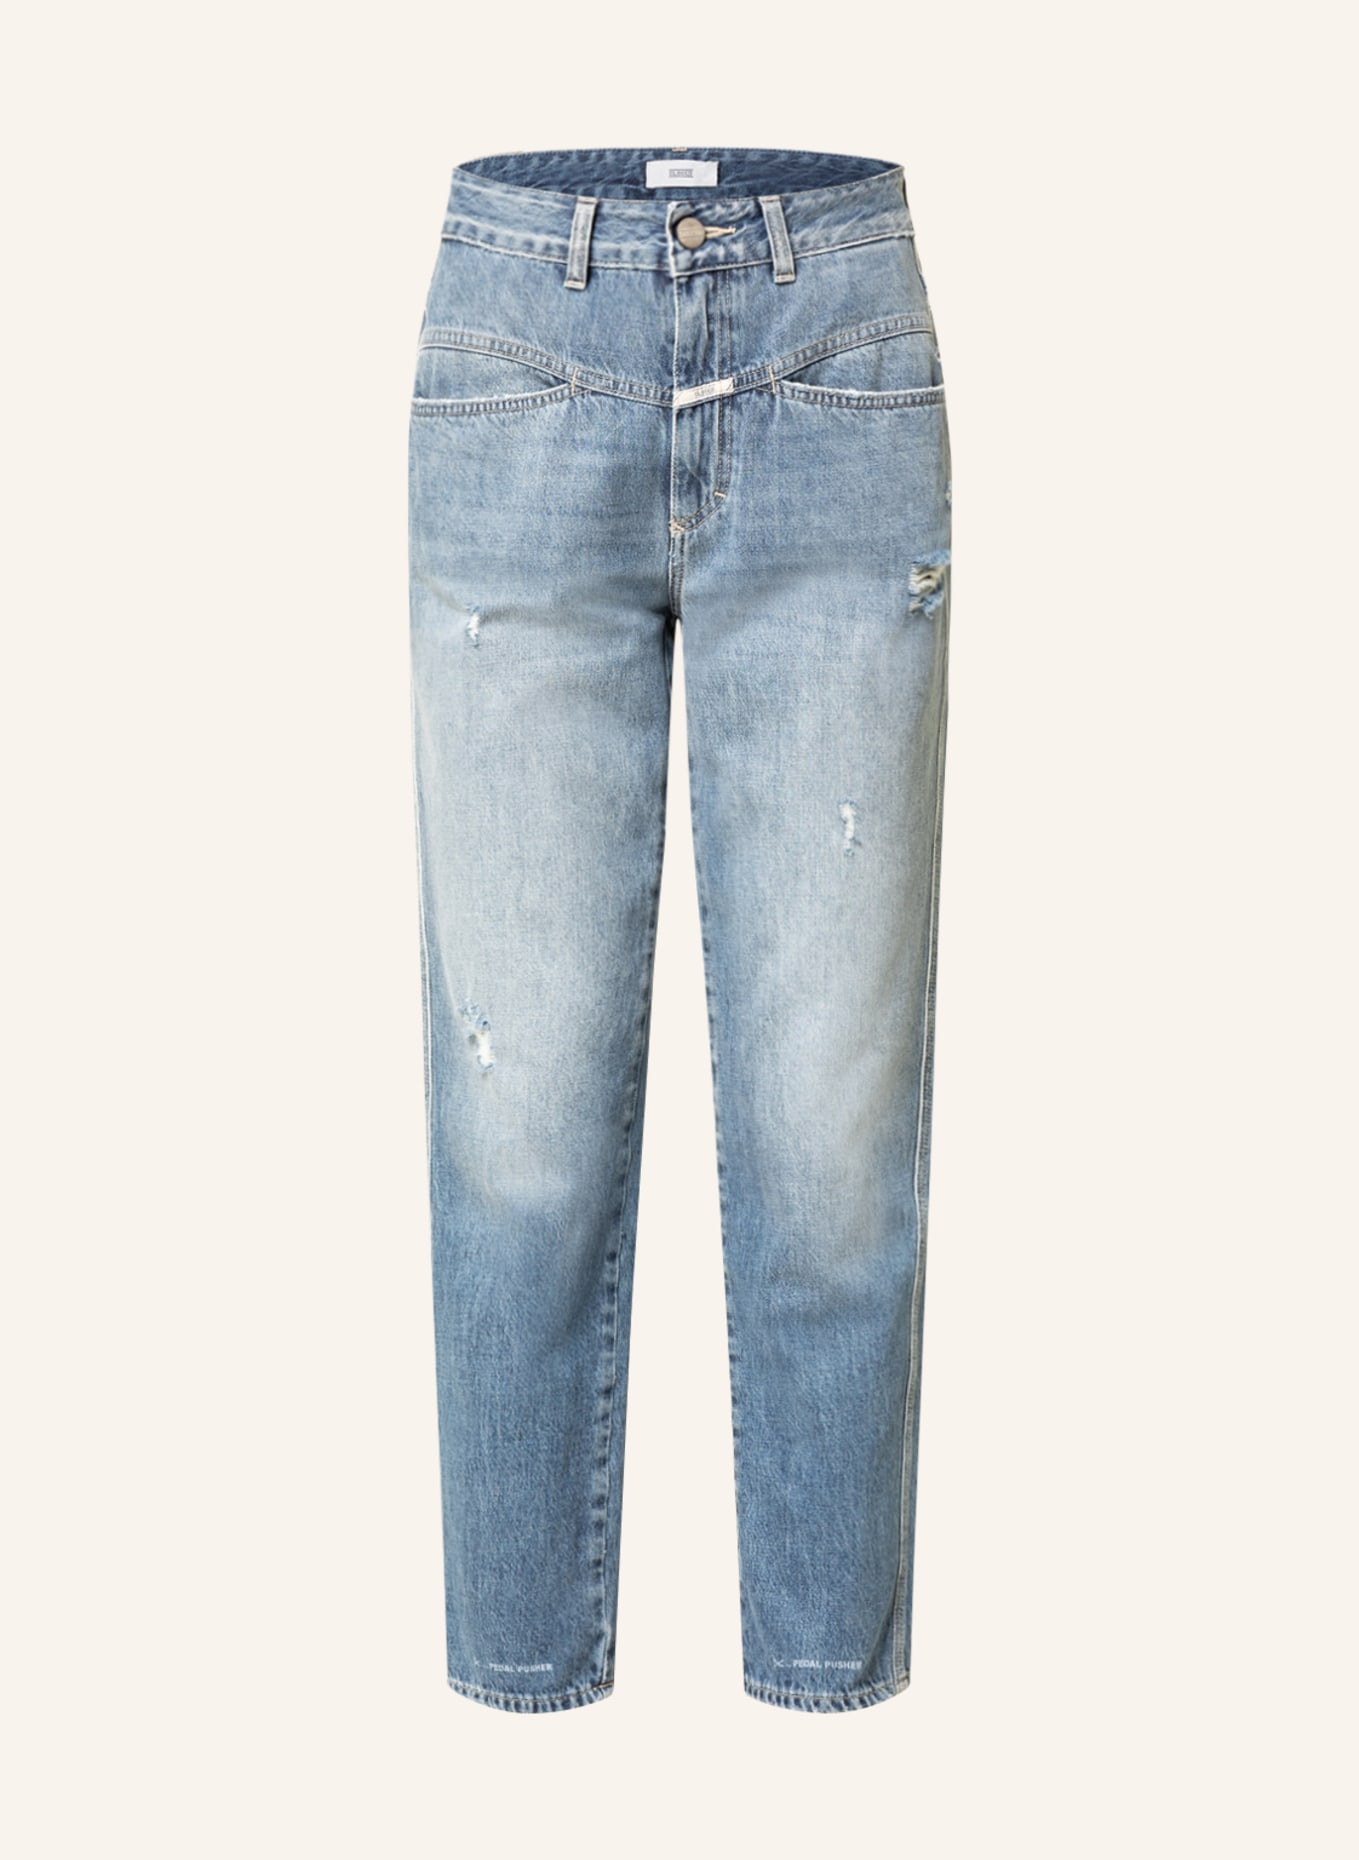 CLOSED Jeans PEDAL PUSHER, Farbe: MBL MID BLUE (Bild 1)